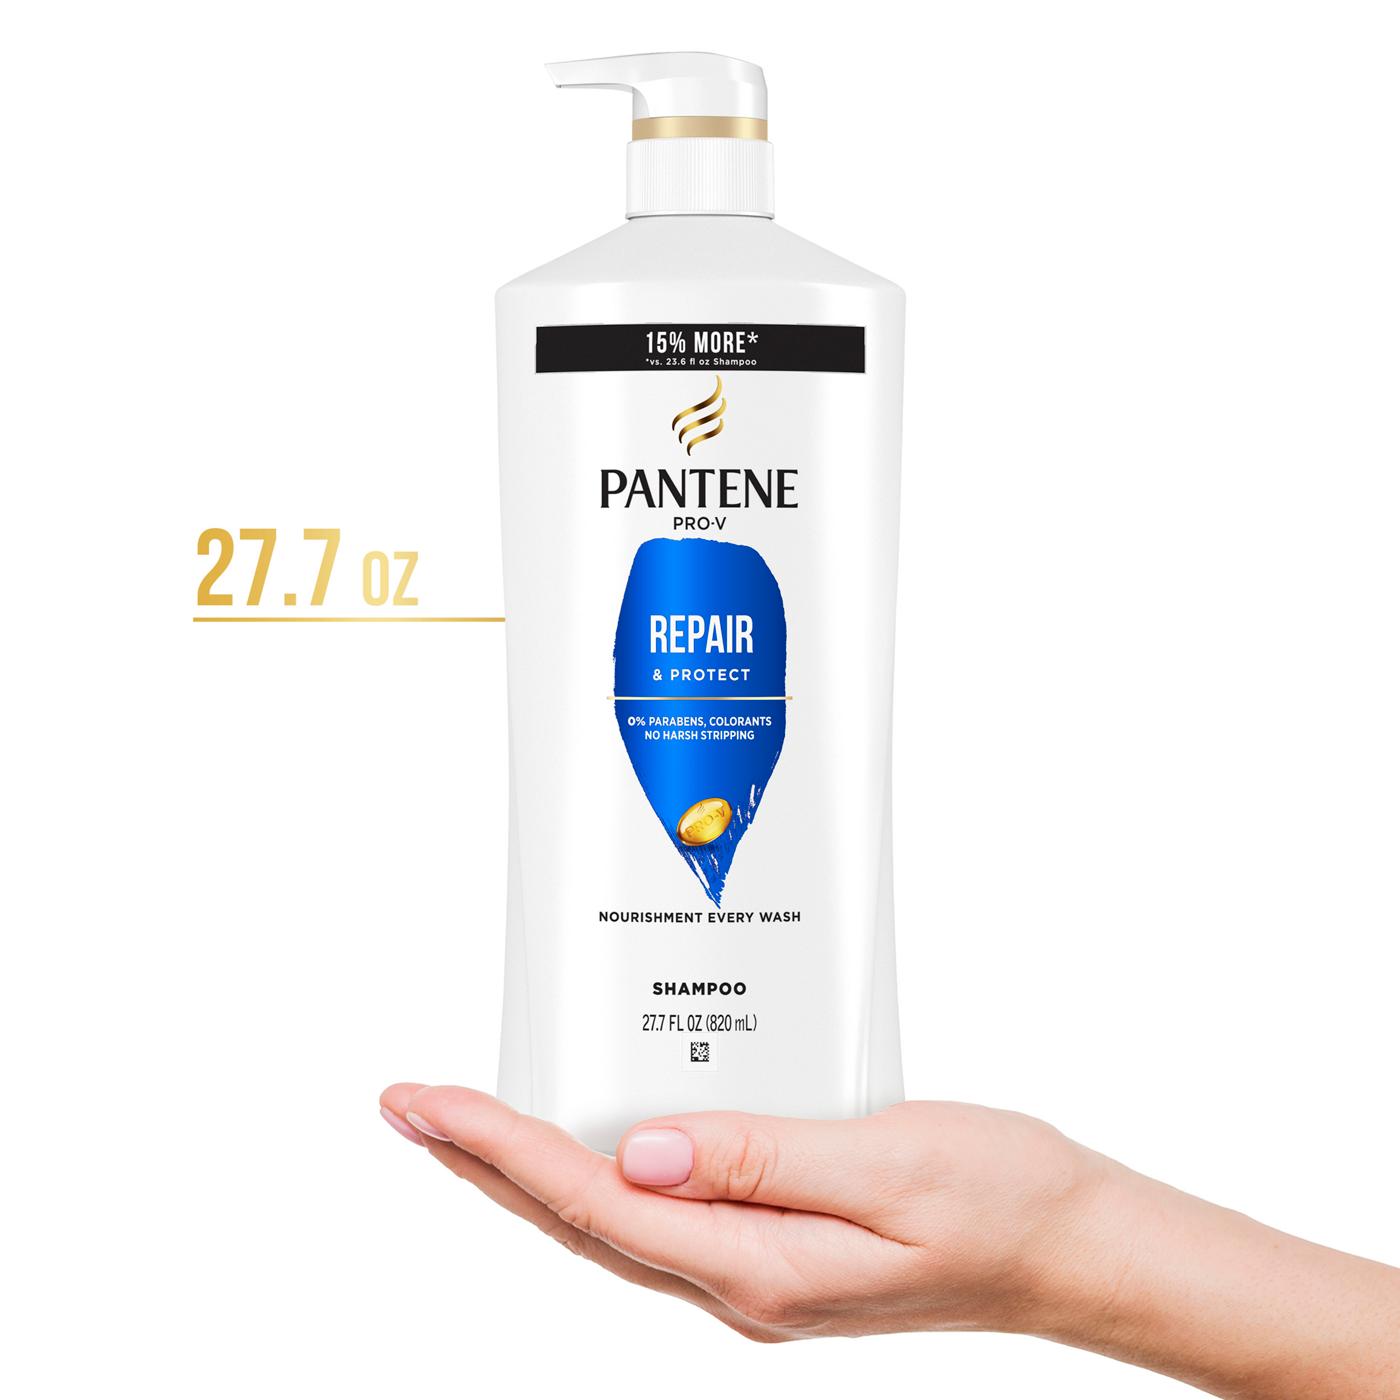 Pantene Pro-V Repair & Protect Shampoo; image 9 of 9